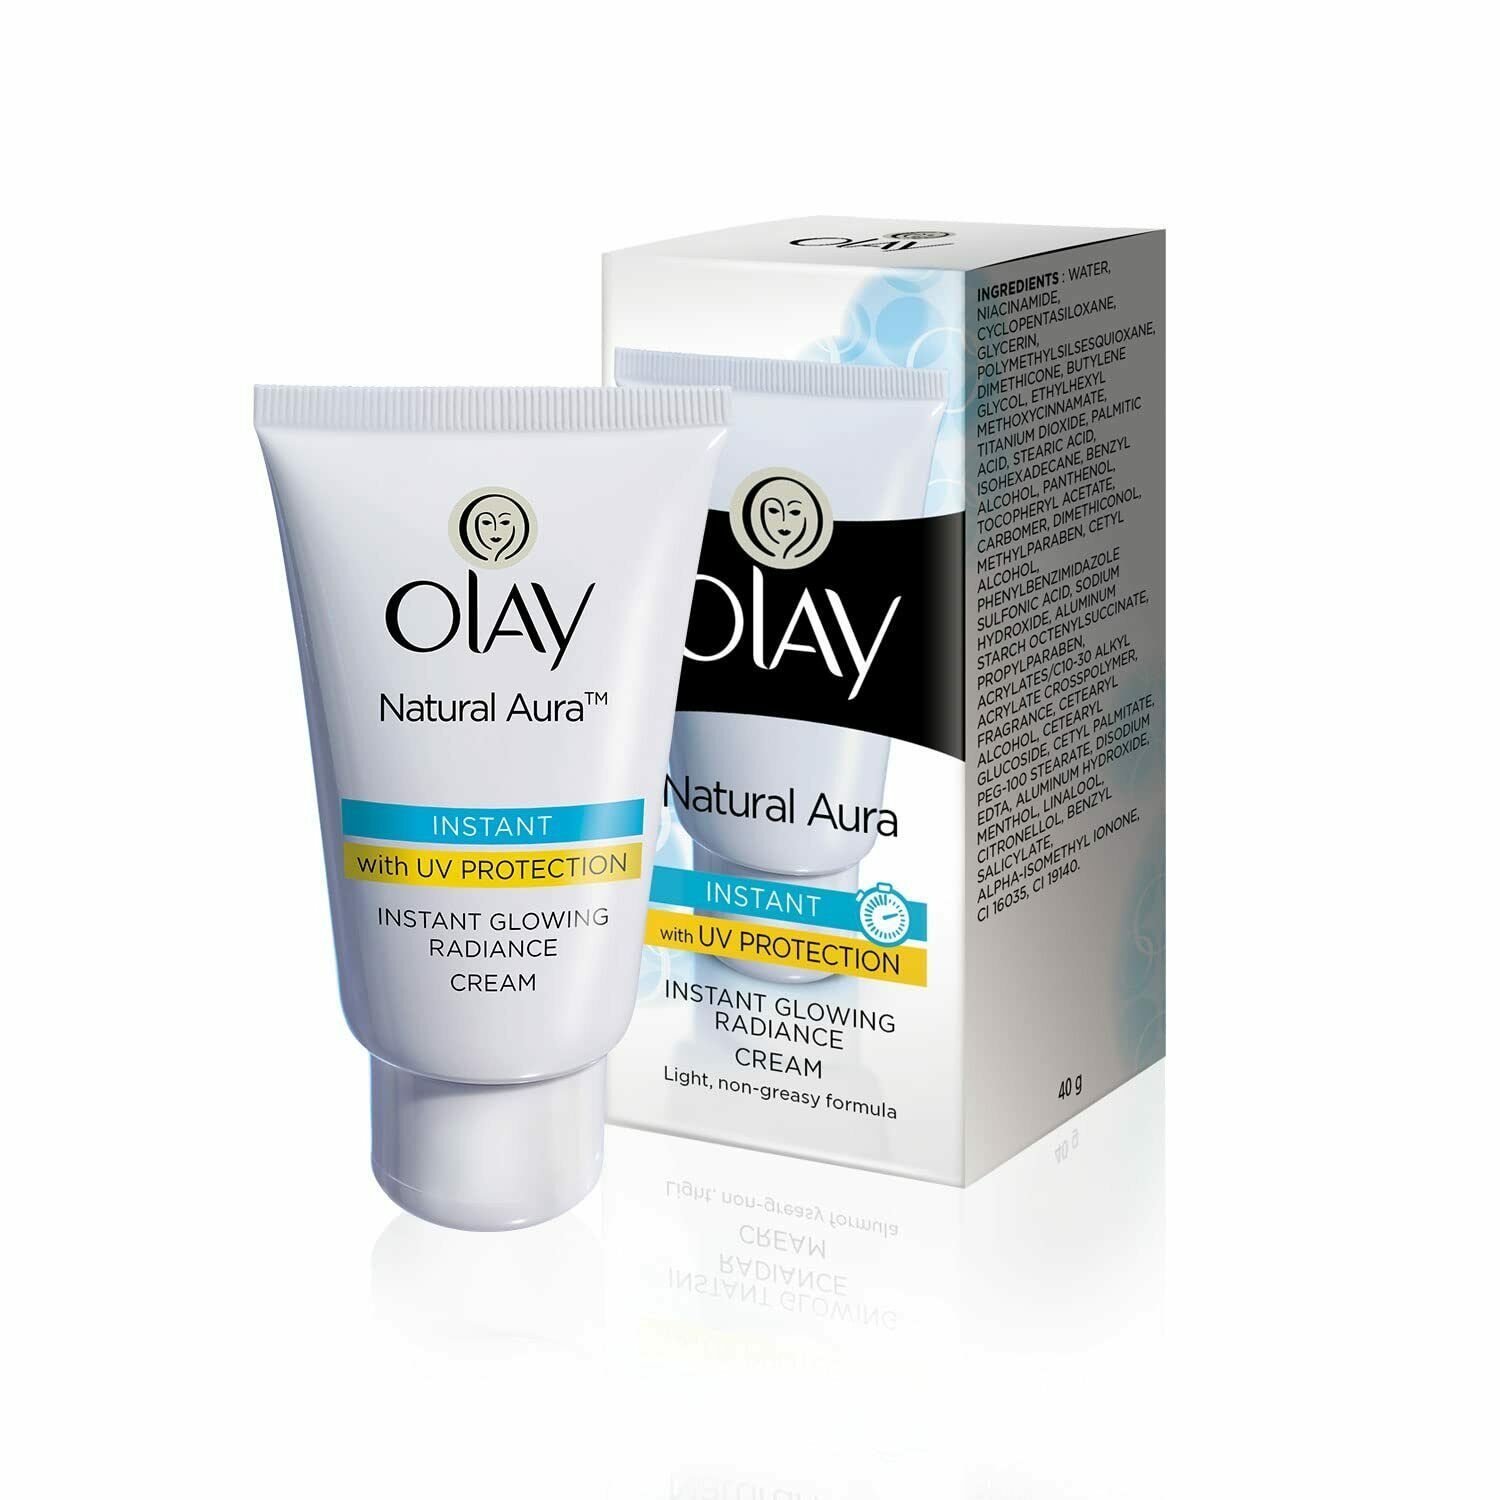 Olay Natural Aura Vitamin B3, Pro B5, E with UV Protection 40 gm